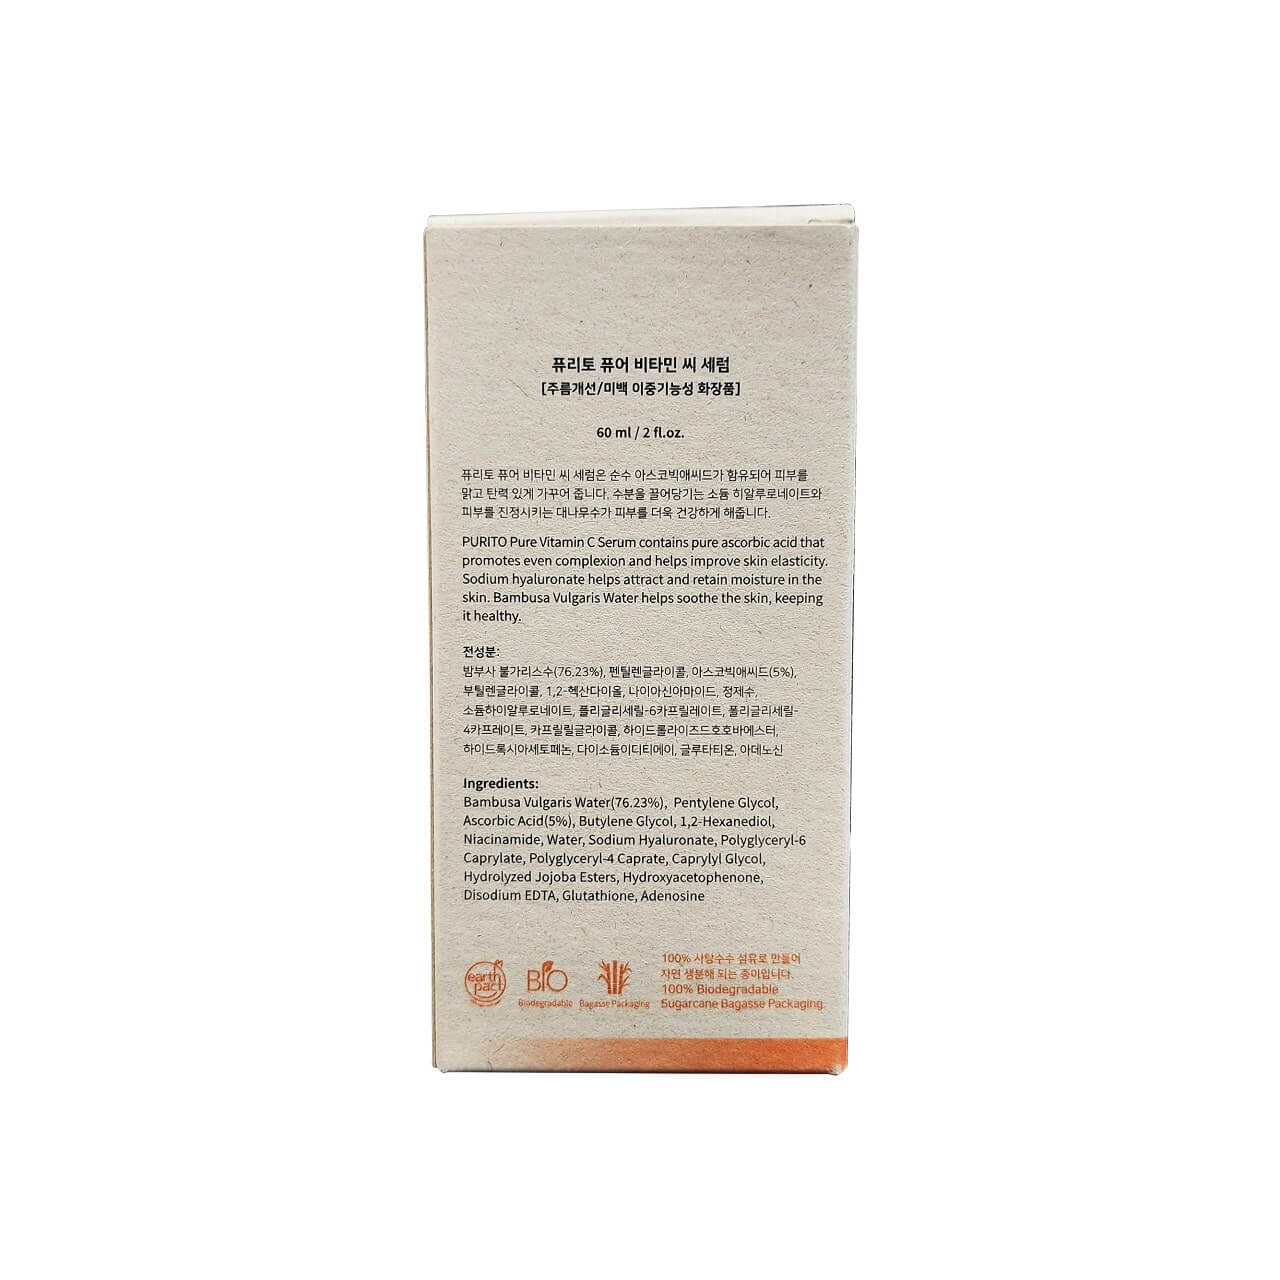 Description and ingredients for Purito Pure Vitamin C Serum (60 mL)